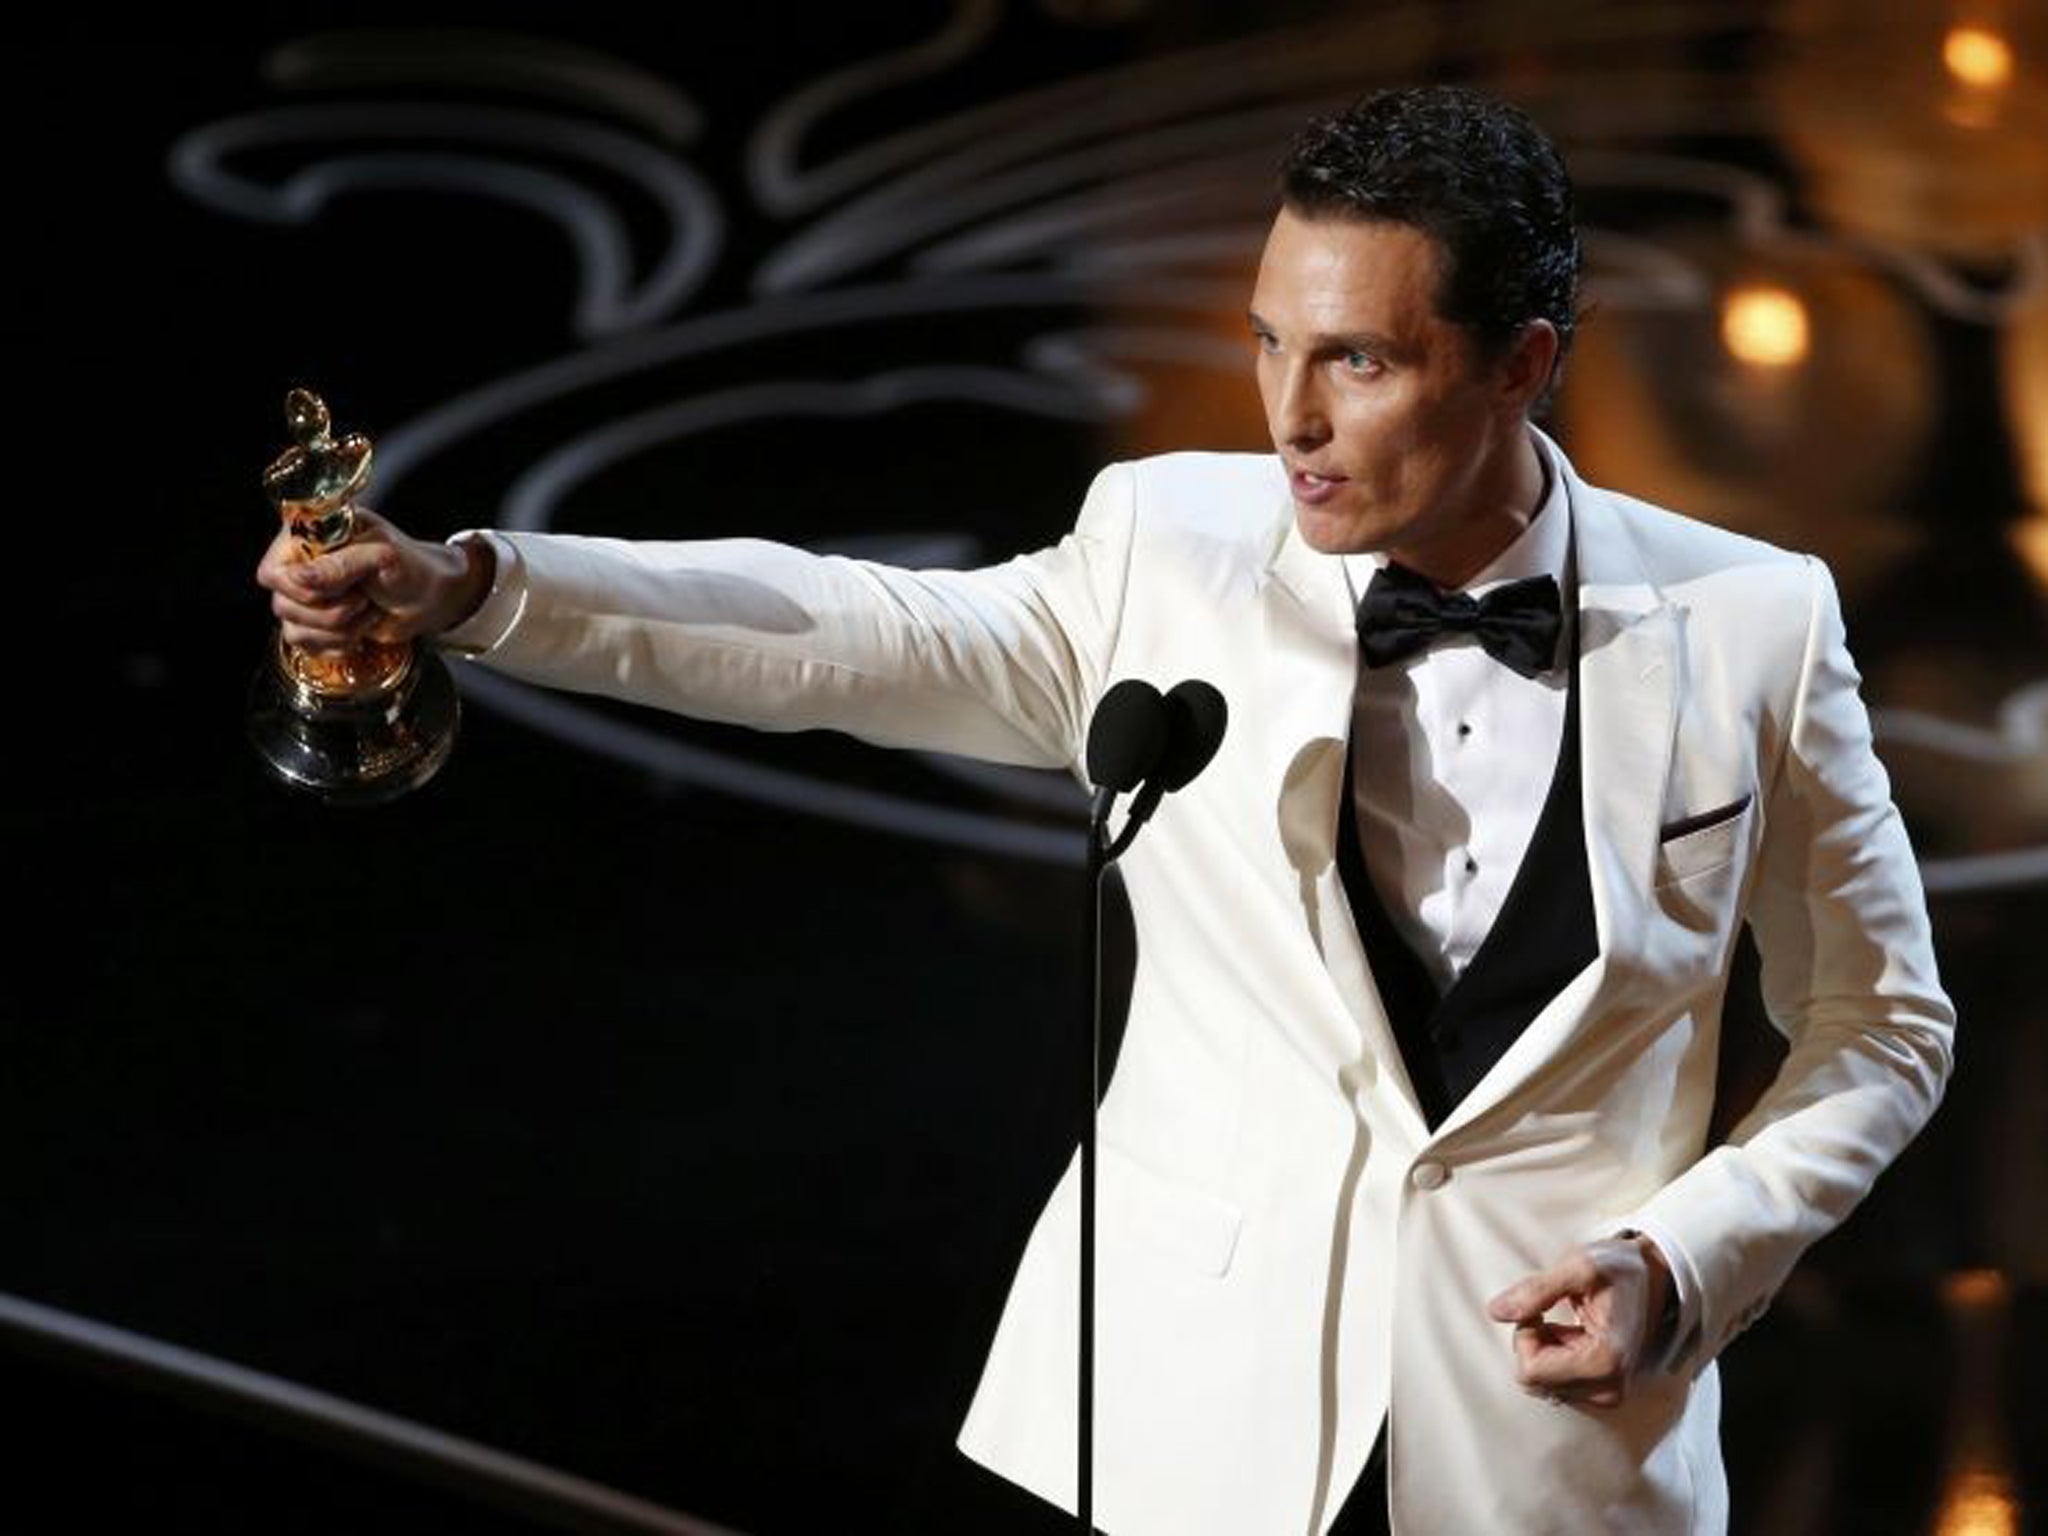 Matthew McConaughey won the Oscar for best actor